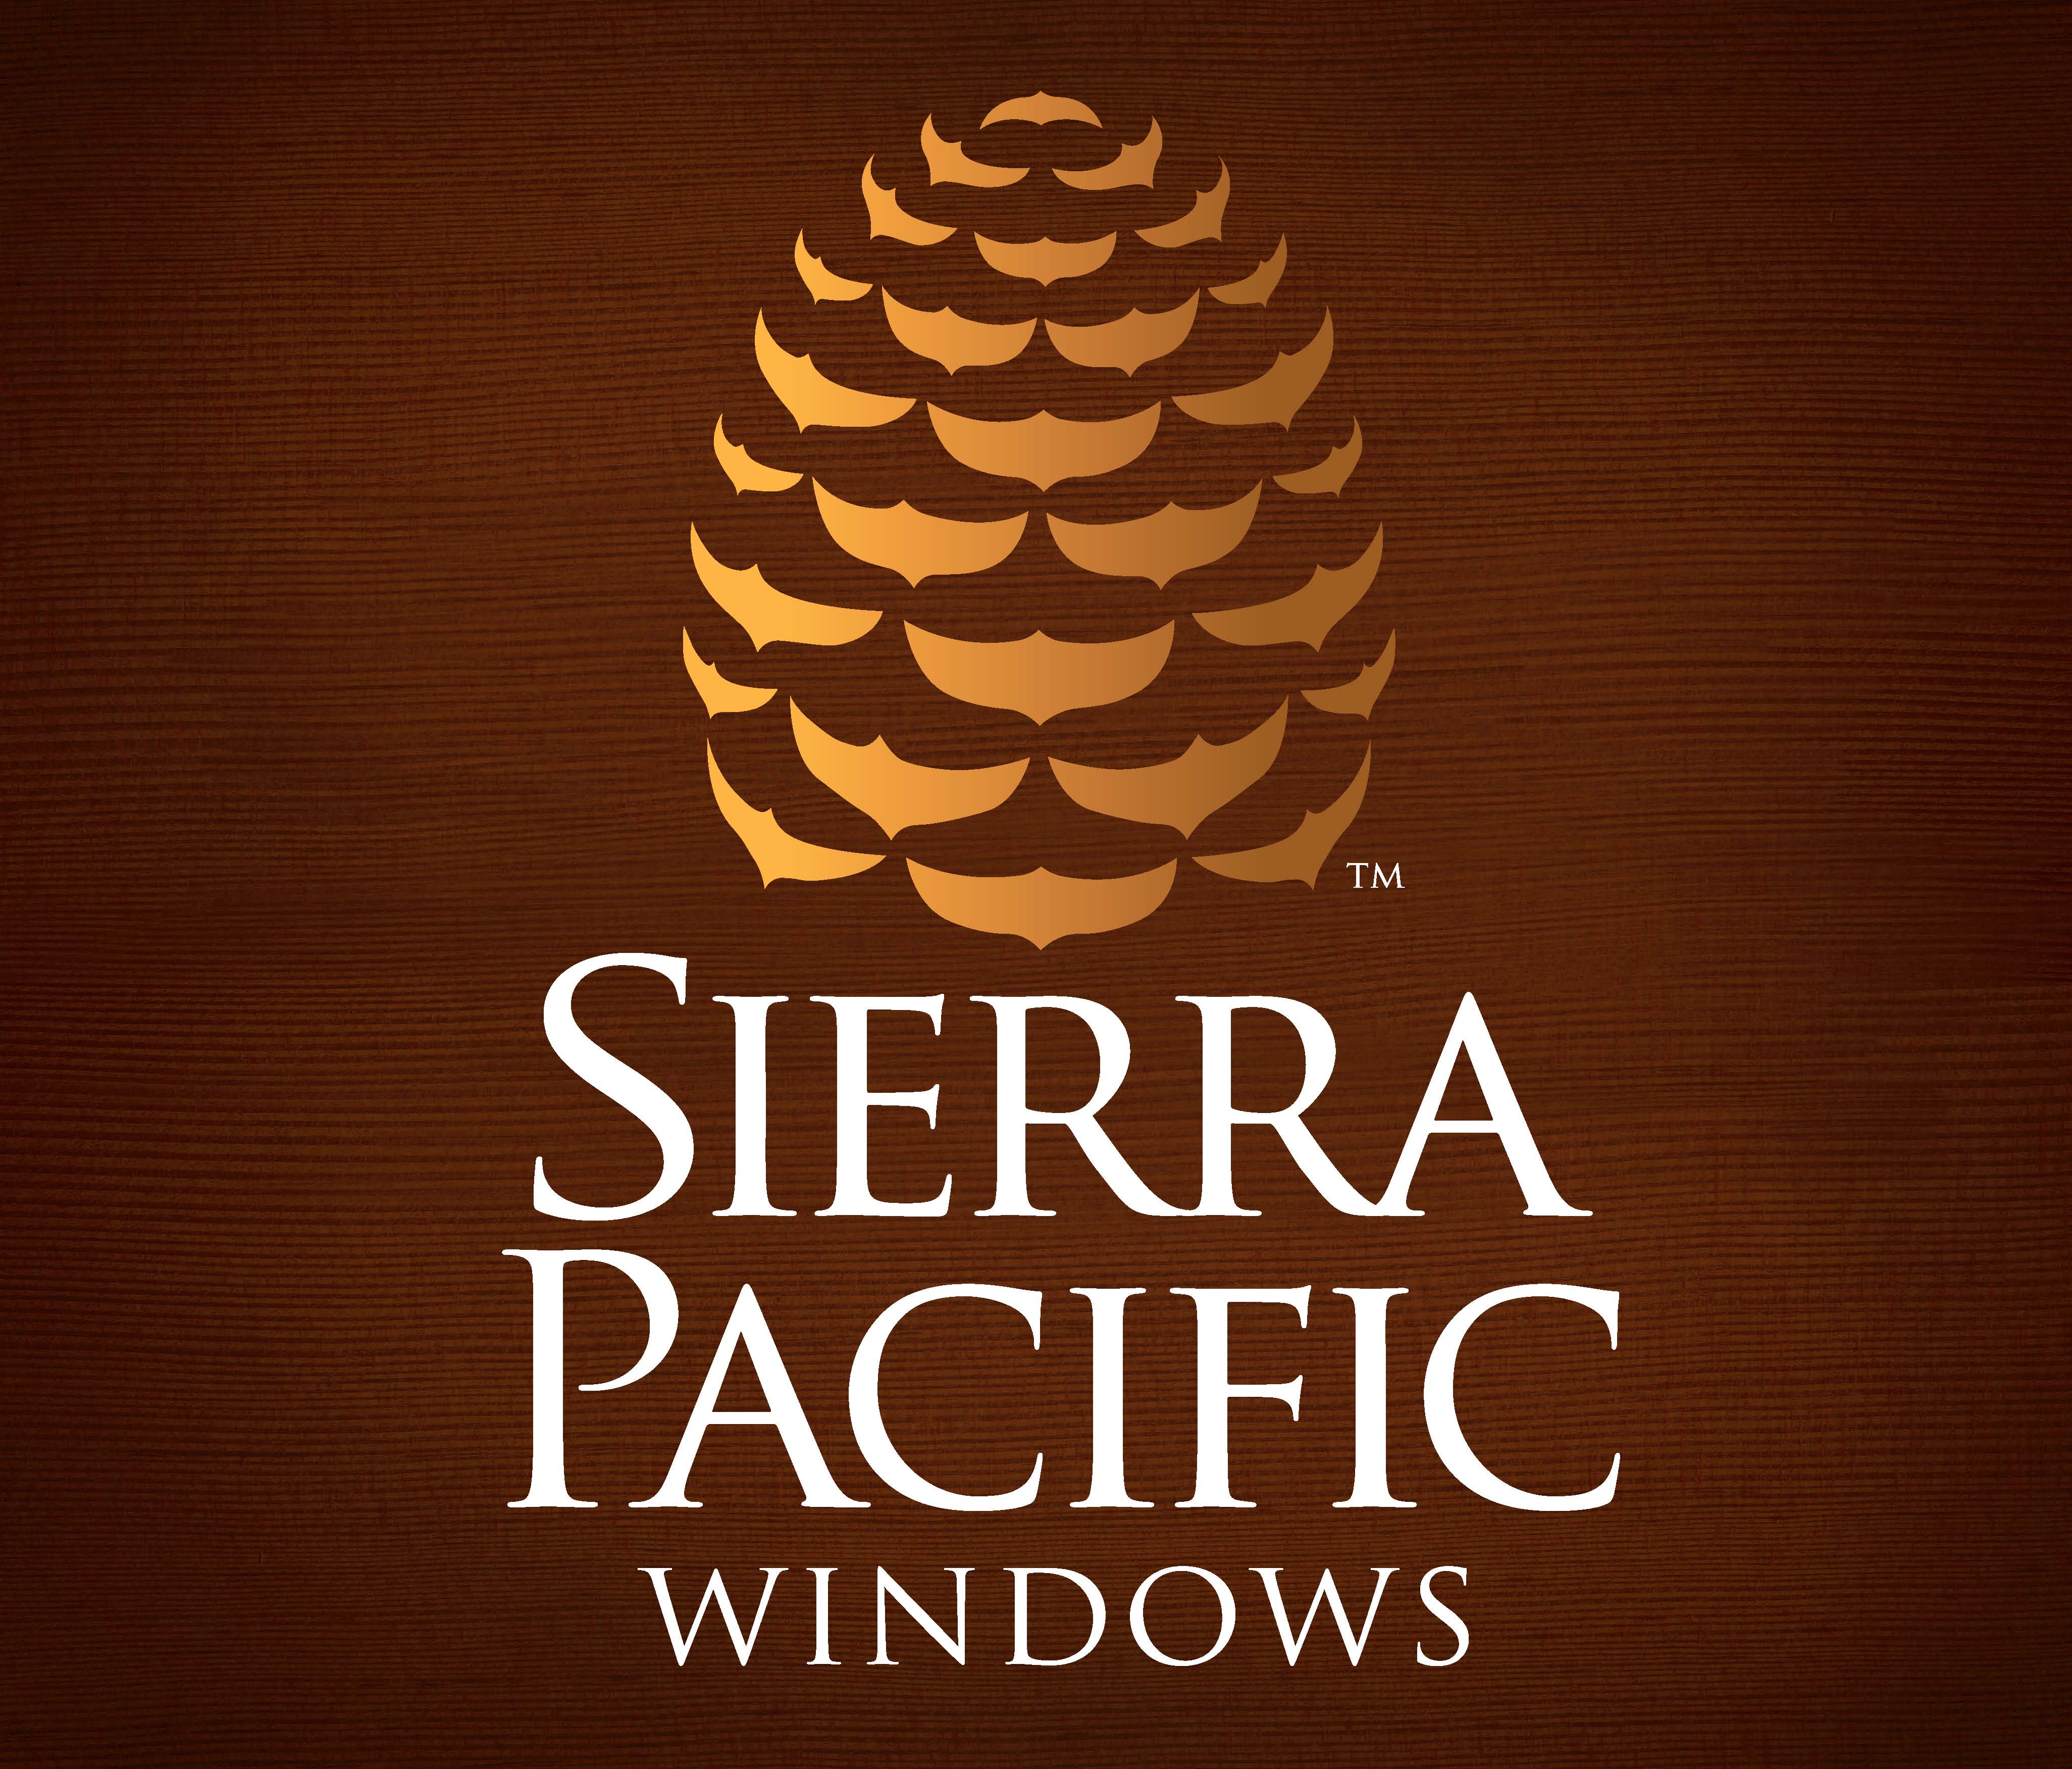 Sierra Pacific Constructors Logo photo - 1